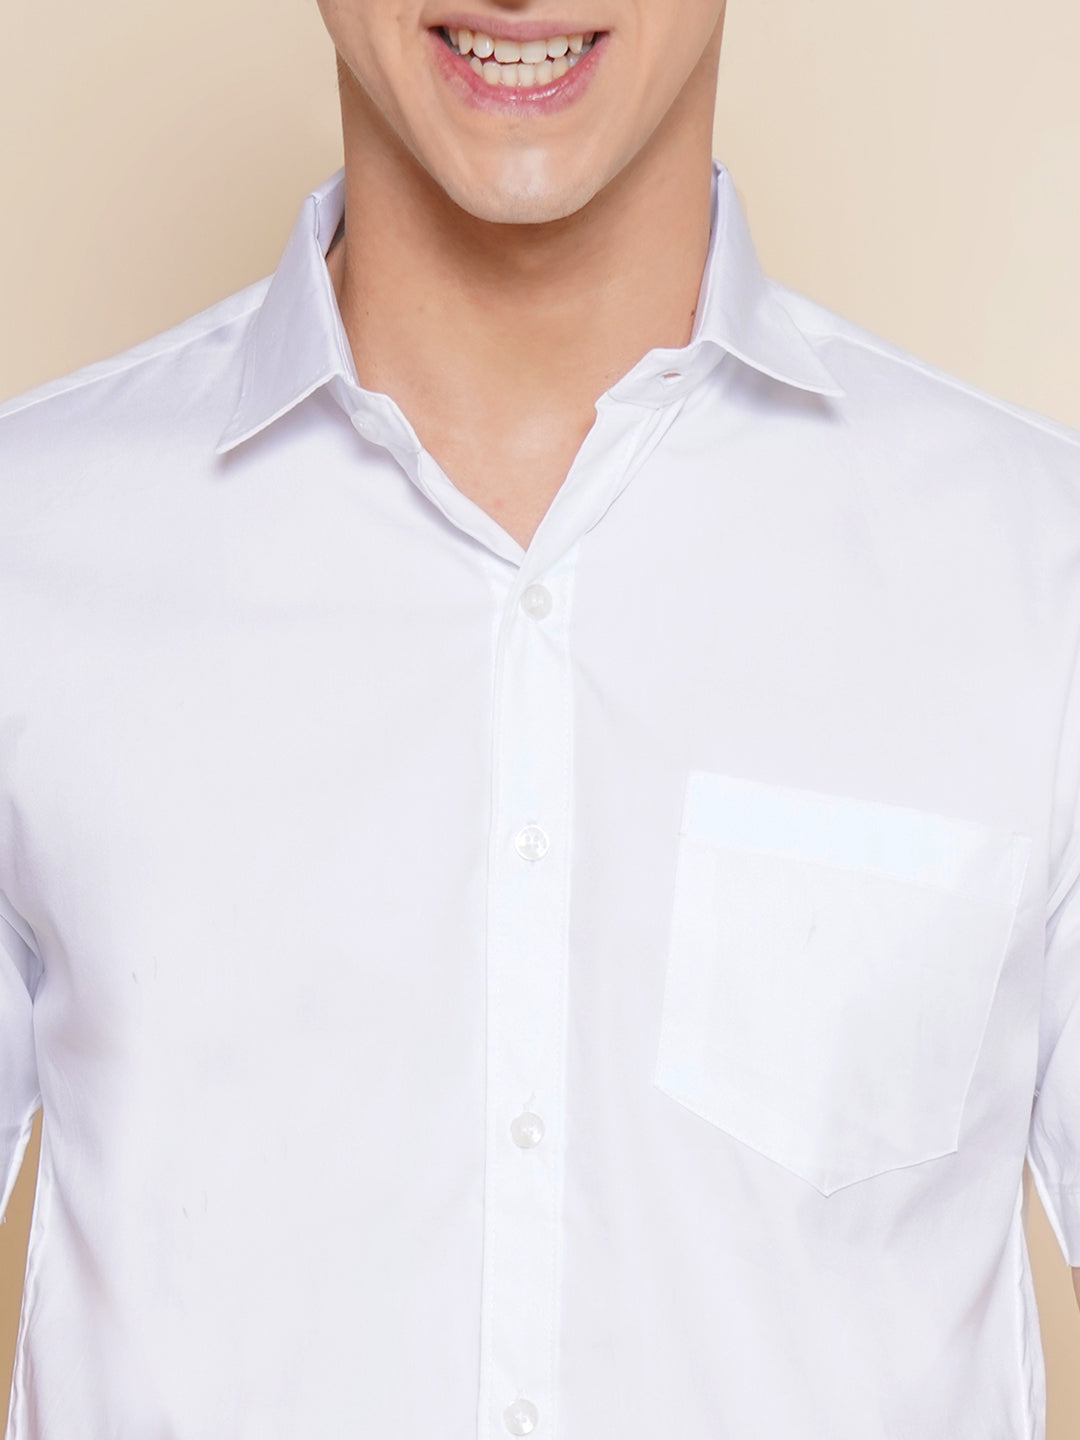 Men Half Sleeve White Colour Shirt and Pocket Dhoti Set